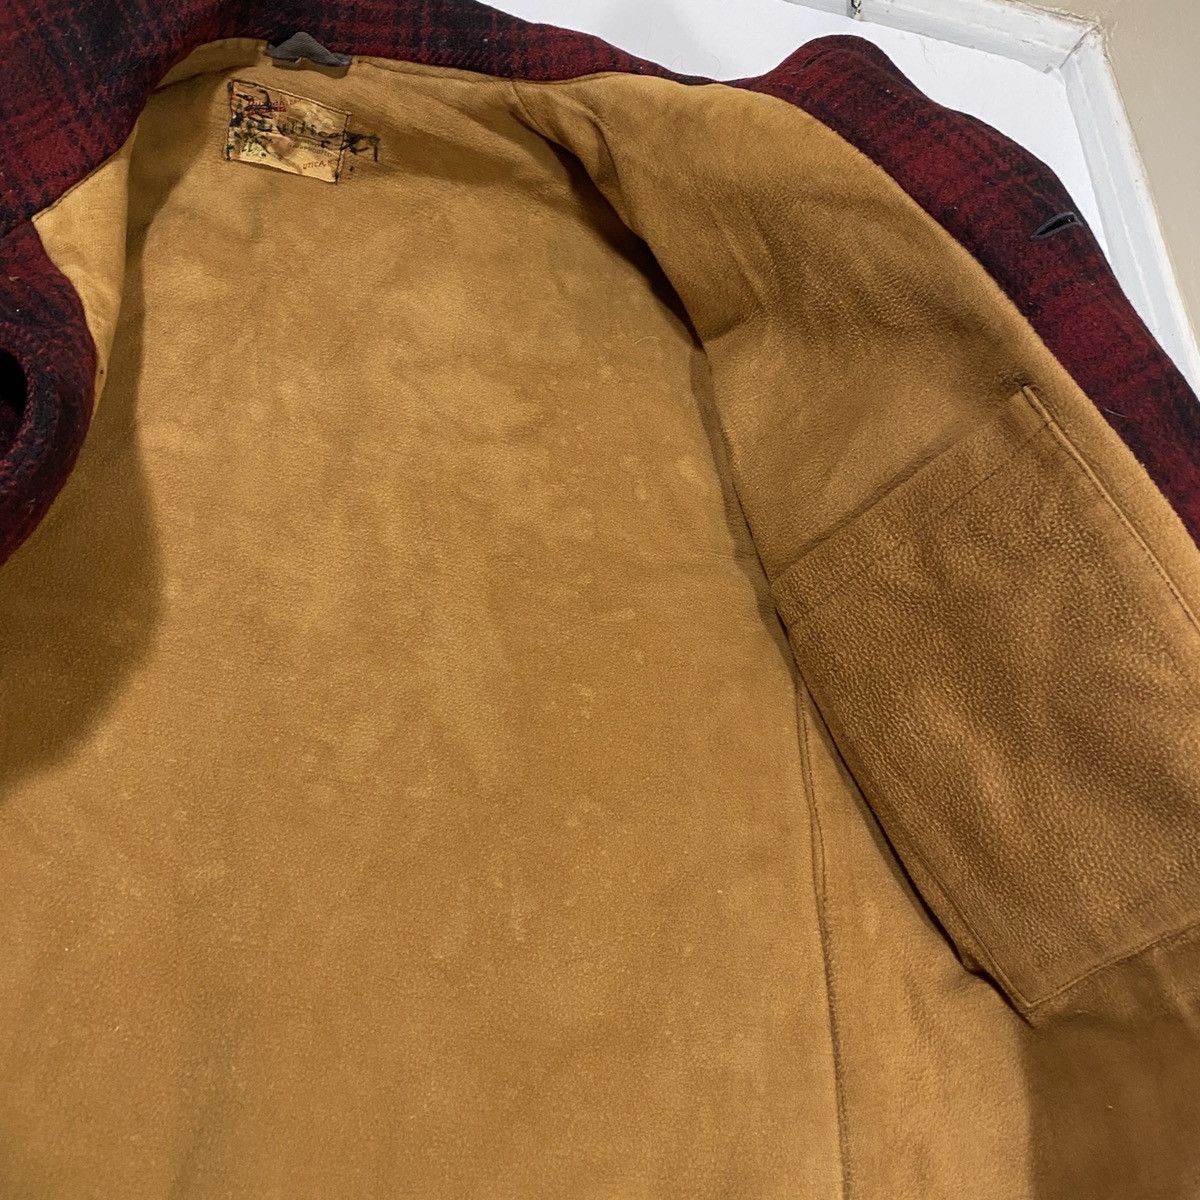 Vintage 40’s Utica Duxbak Mackinaw Hunting Jacket Rainproofed Wool Size US L / EU 52-54 / 3 - 5 Preview